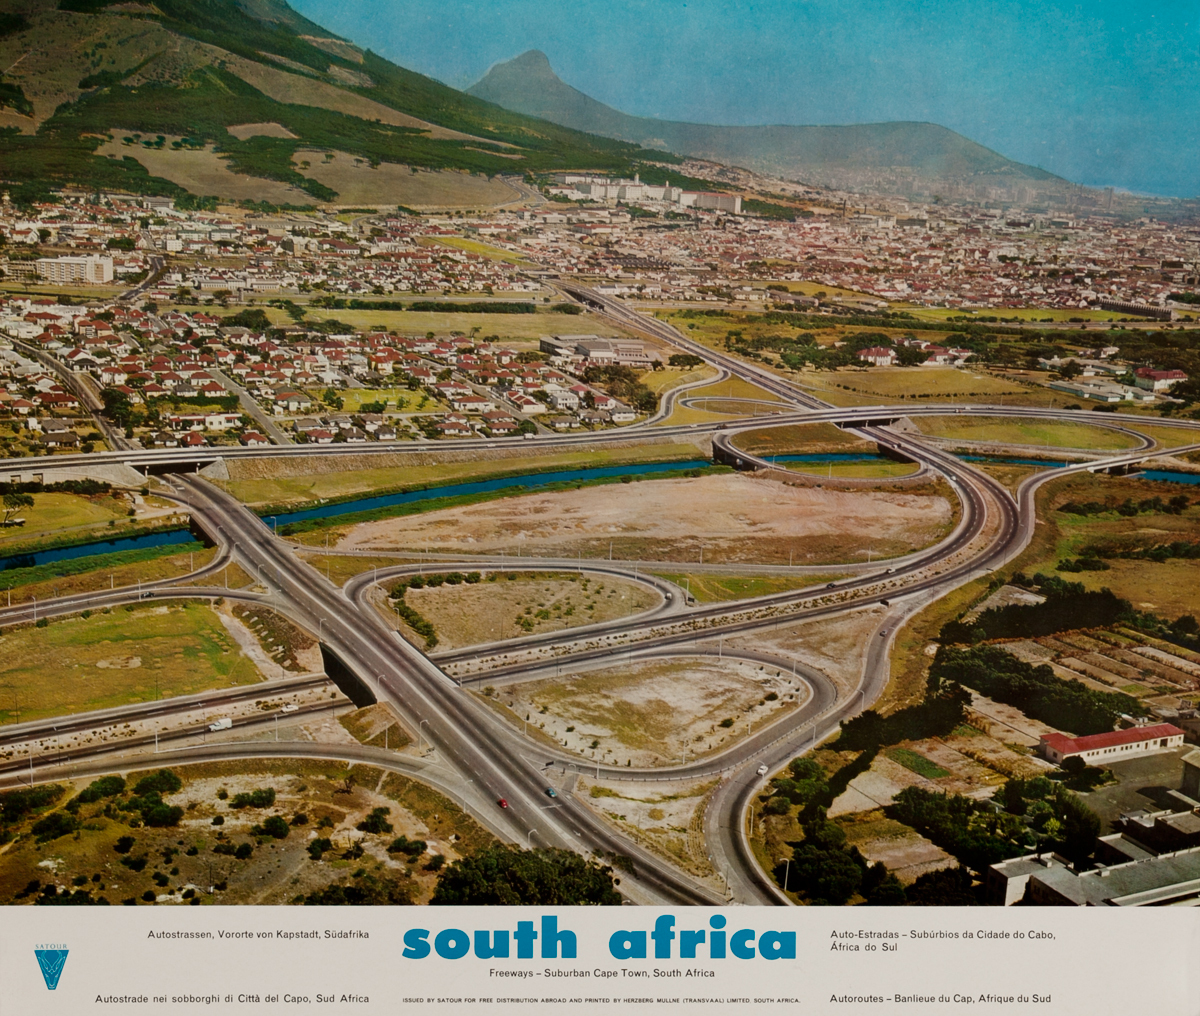 South Africa, Freeways - Suburban Cape Town